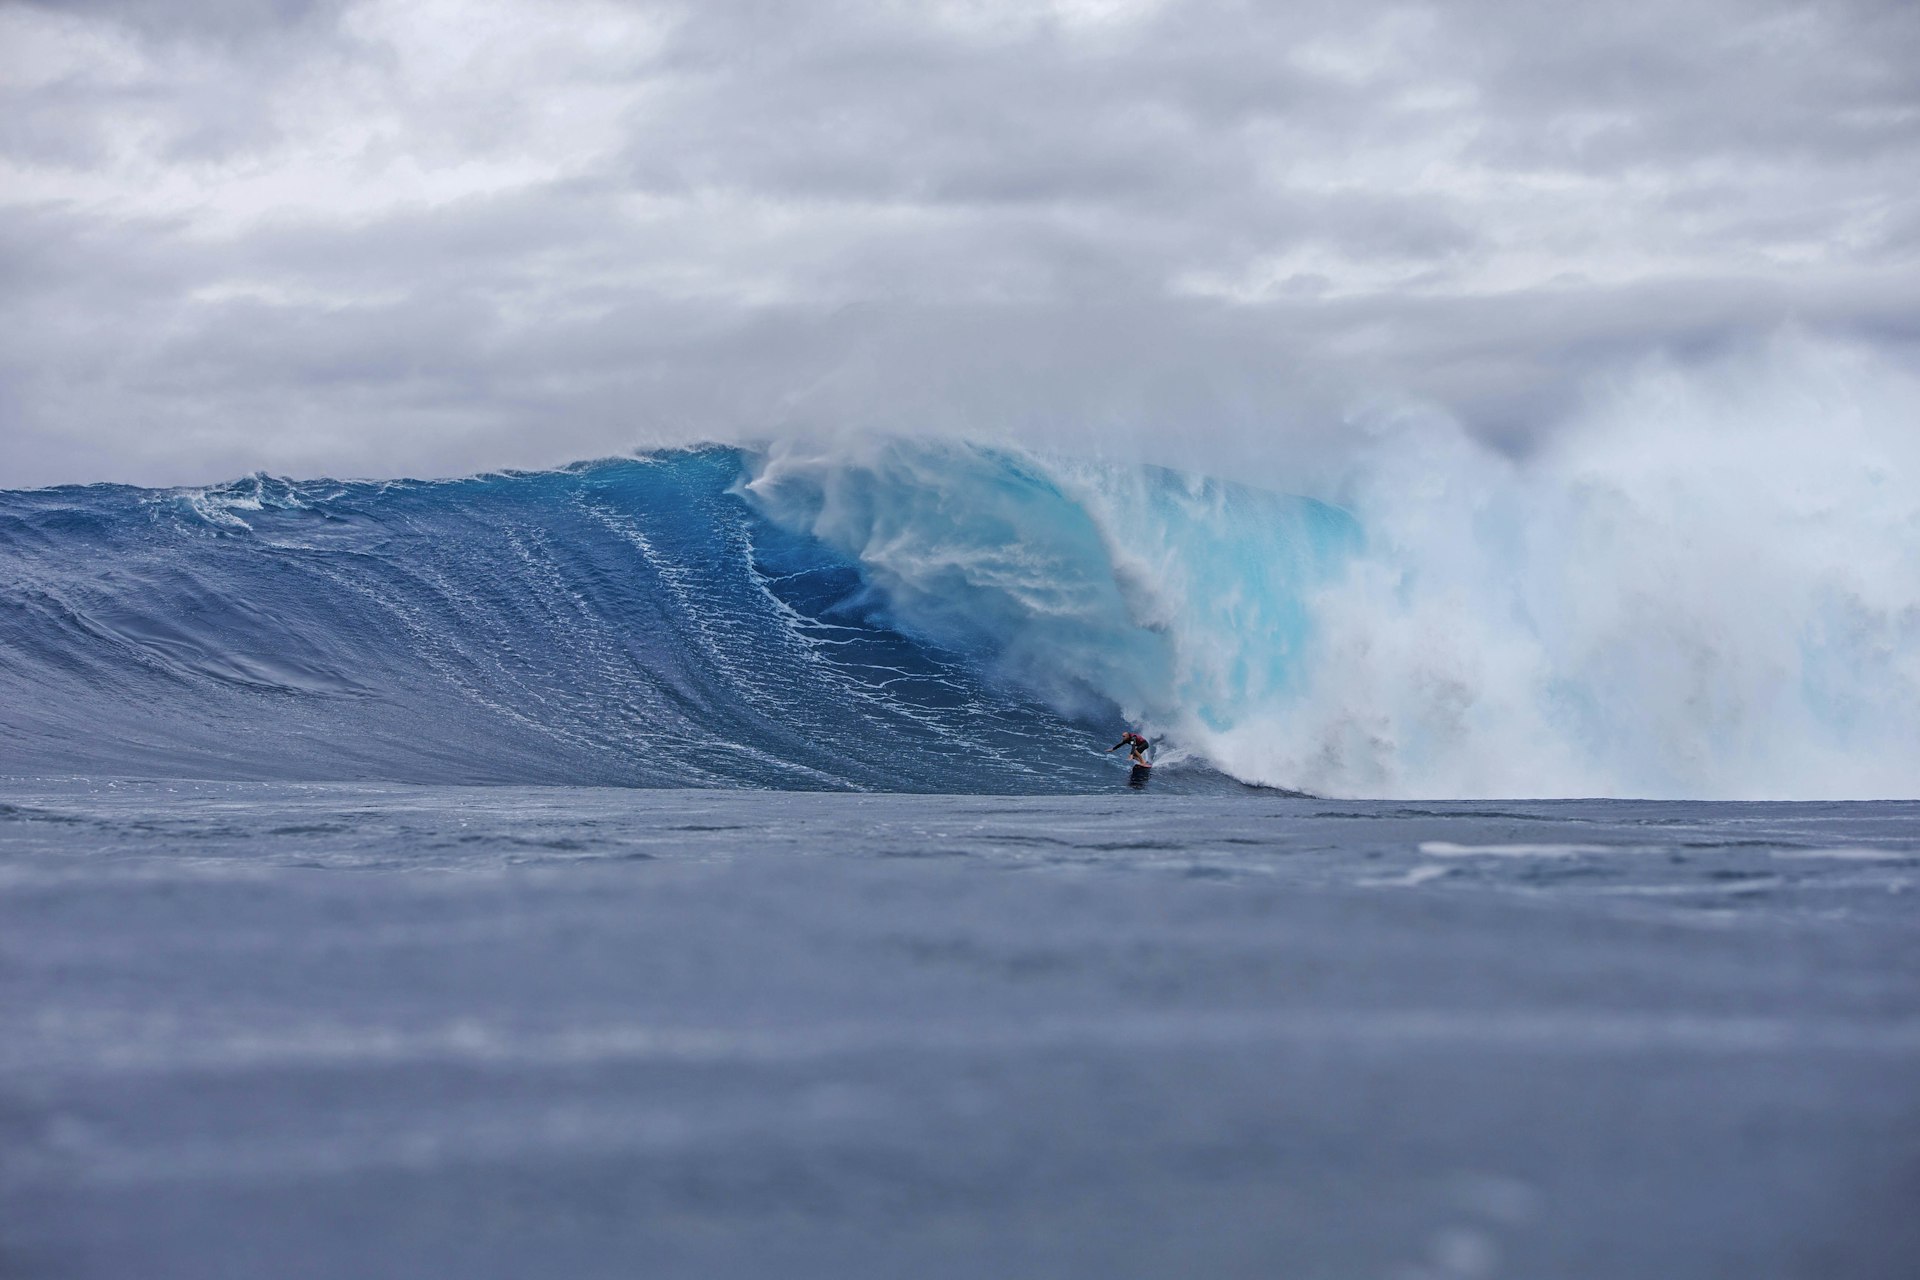 Video: Shane Dorian takes on a mighty El Niño